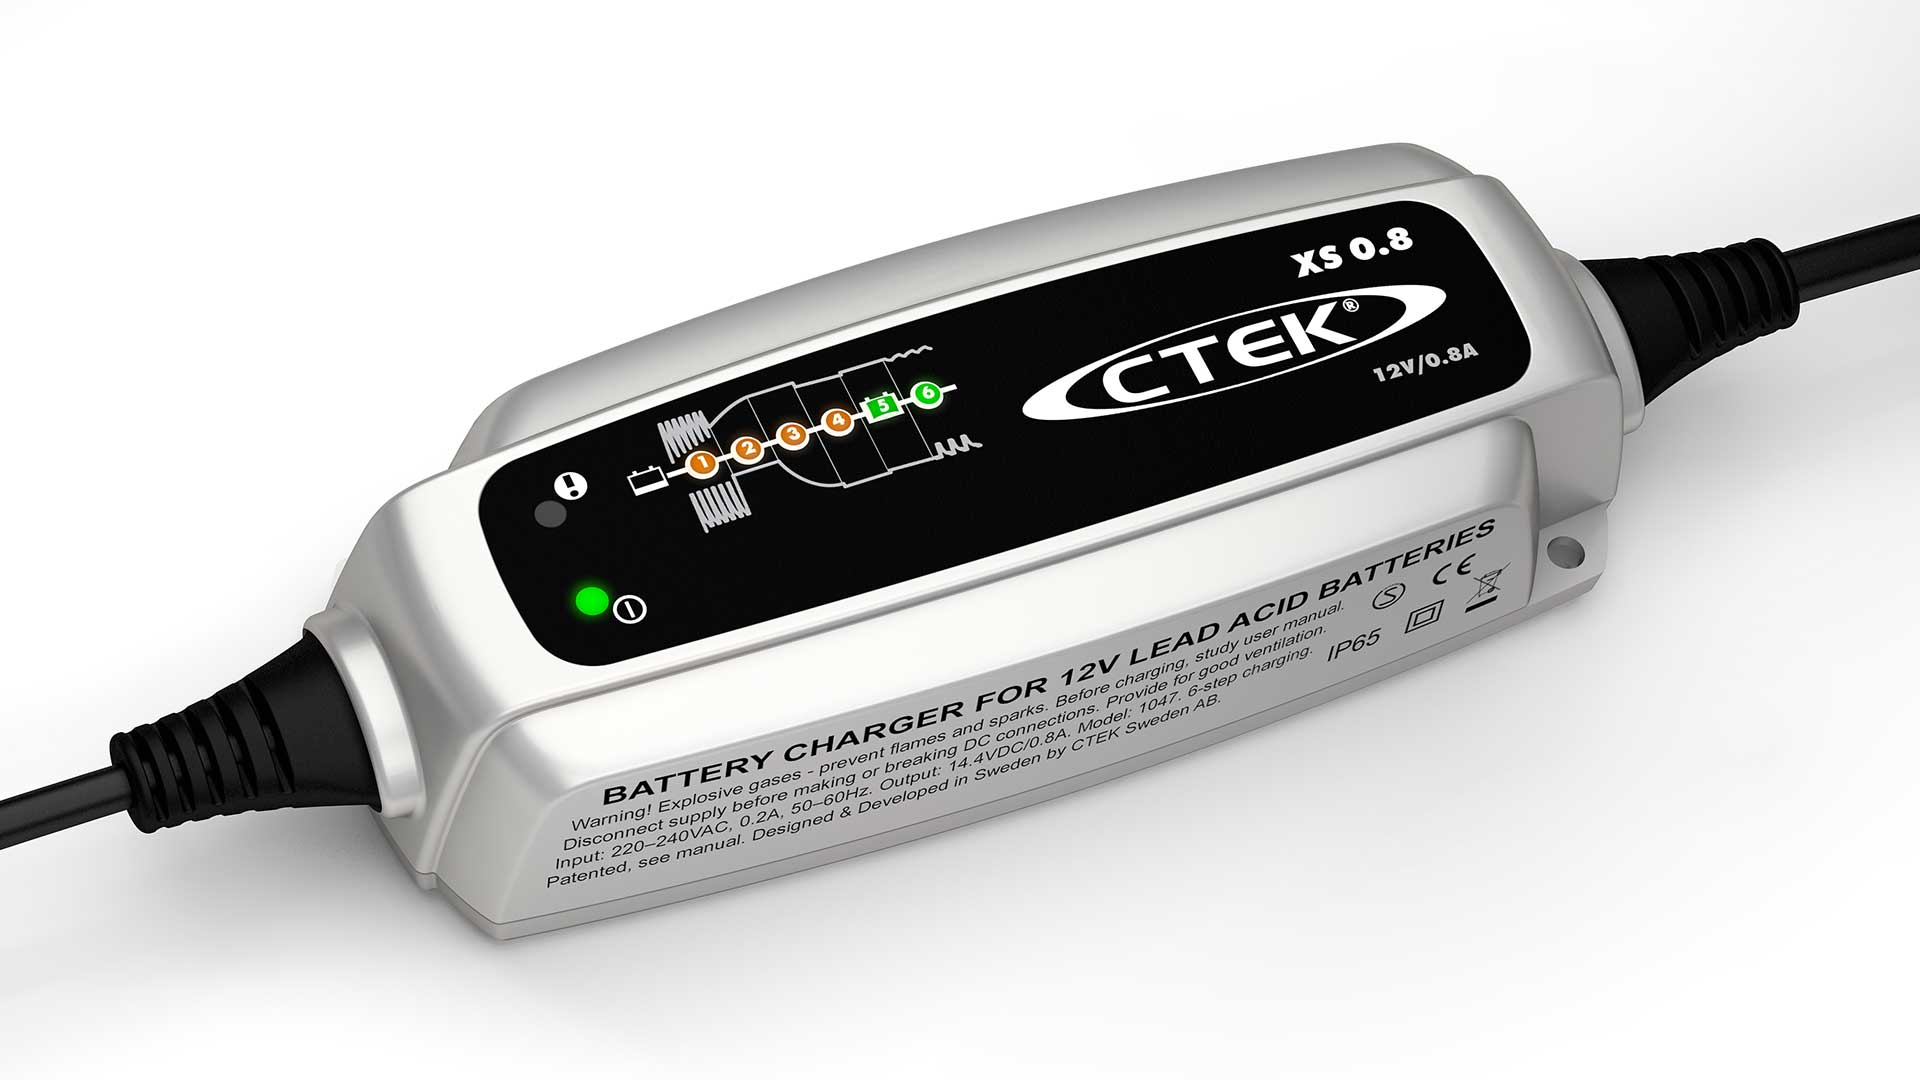 Caricabatterie XS 0.8 CTEK